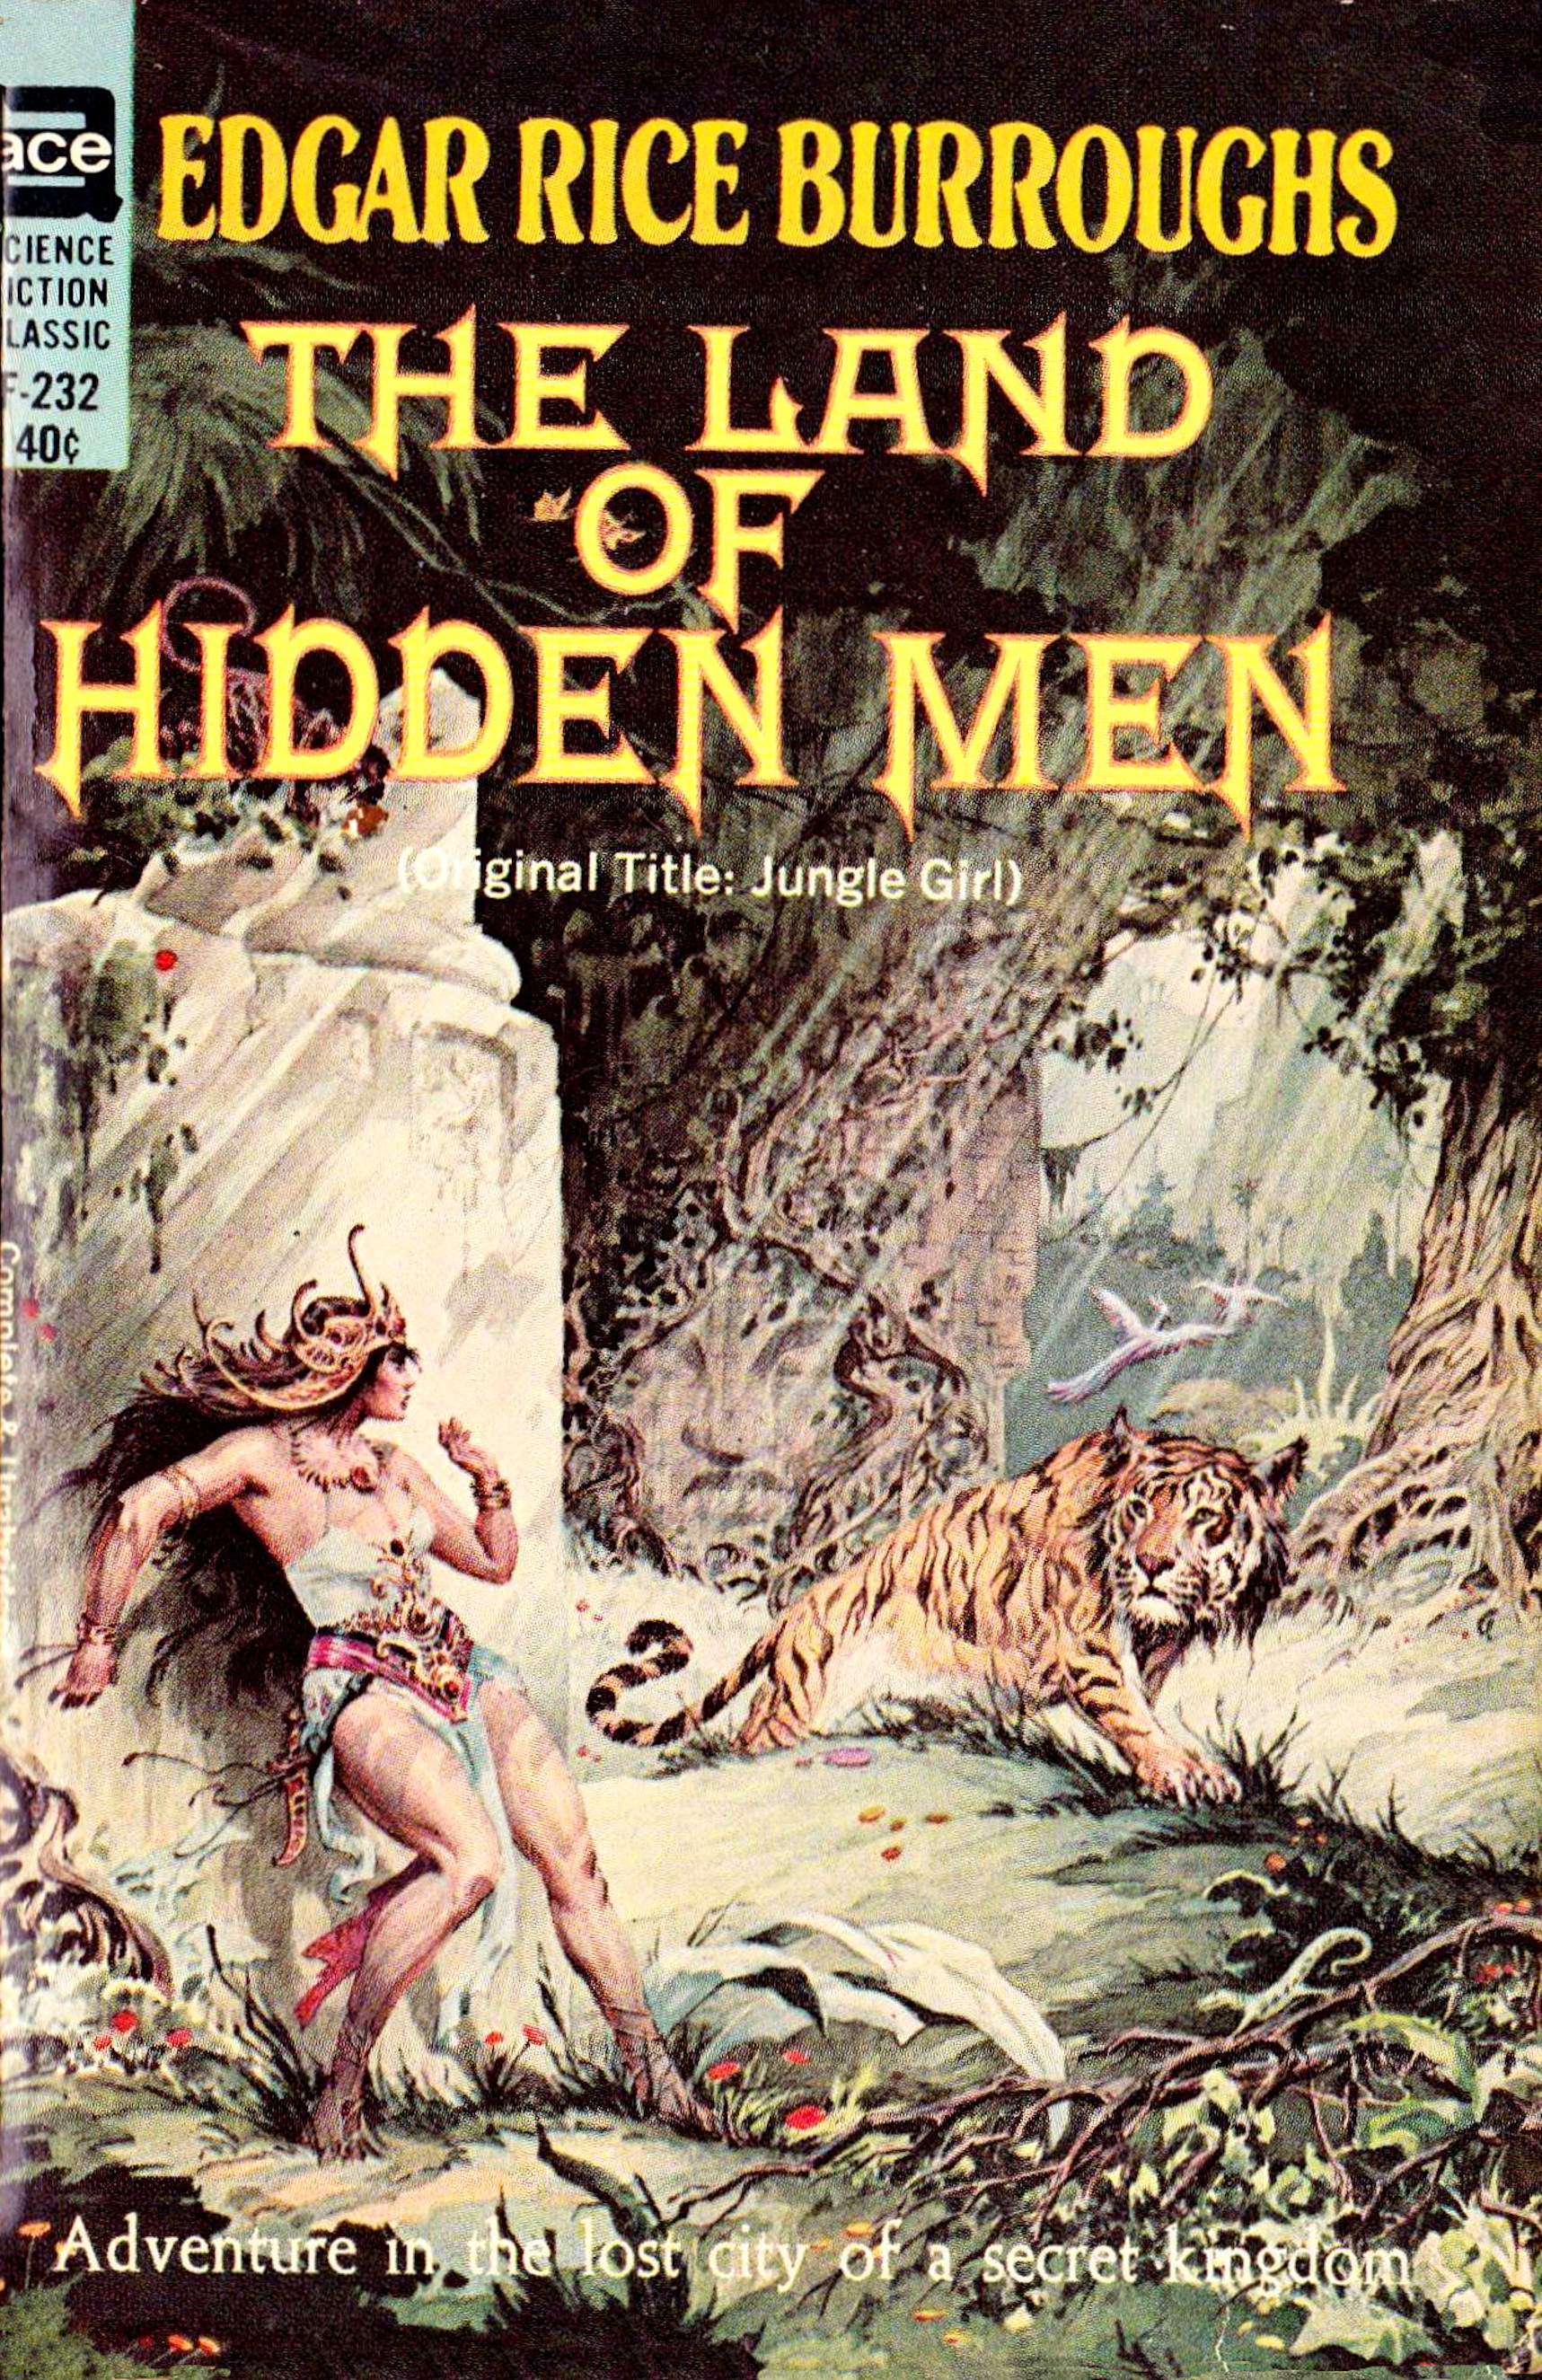 The land of hidden men